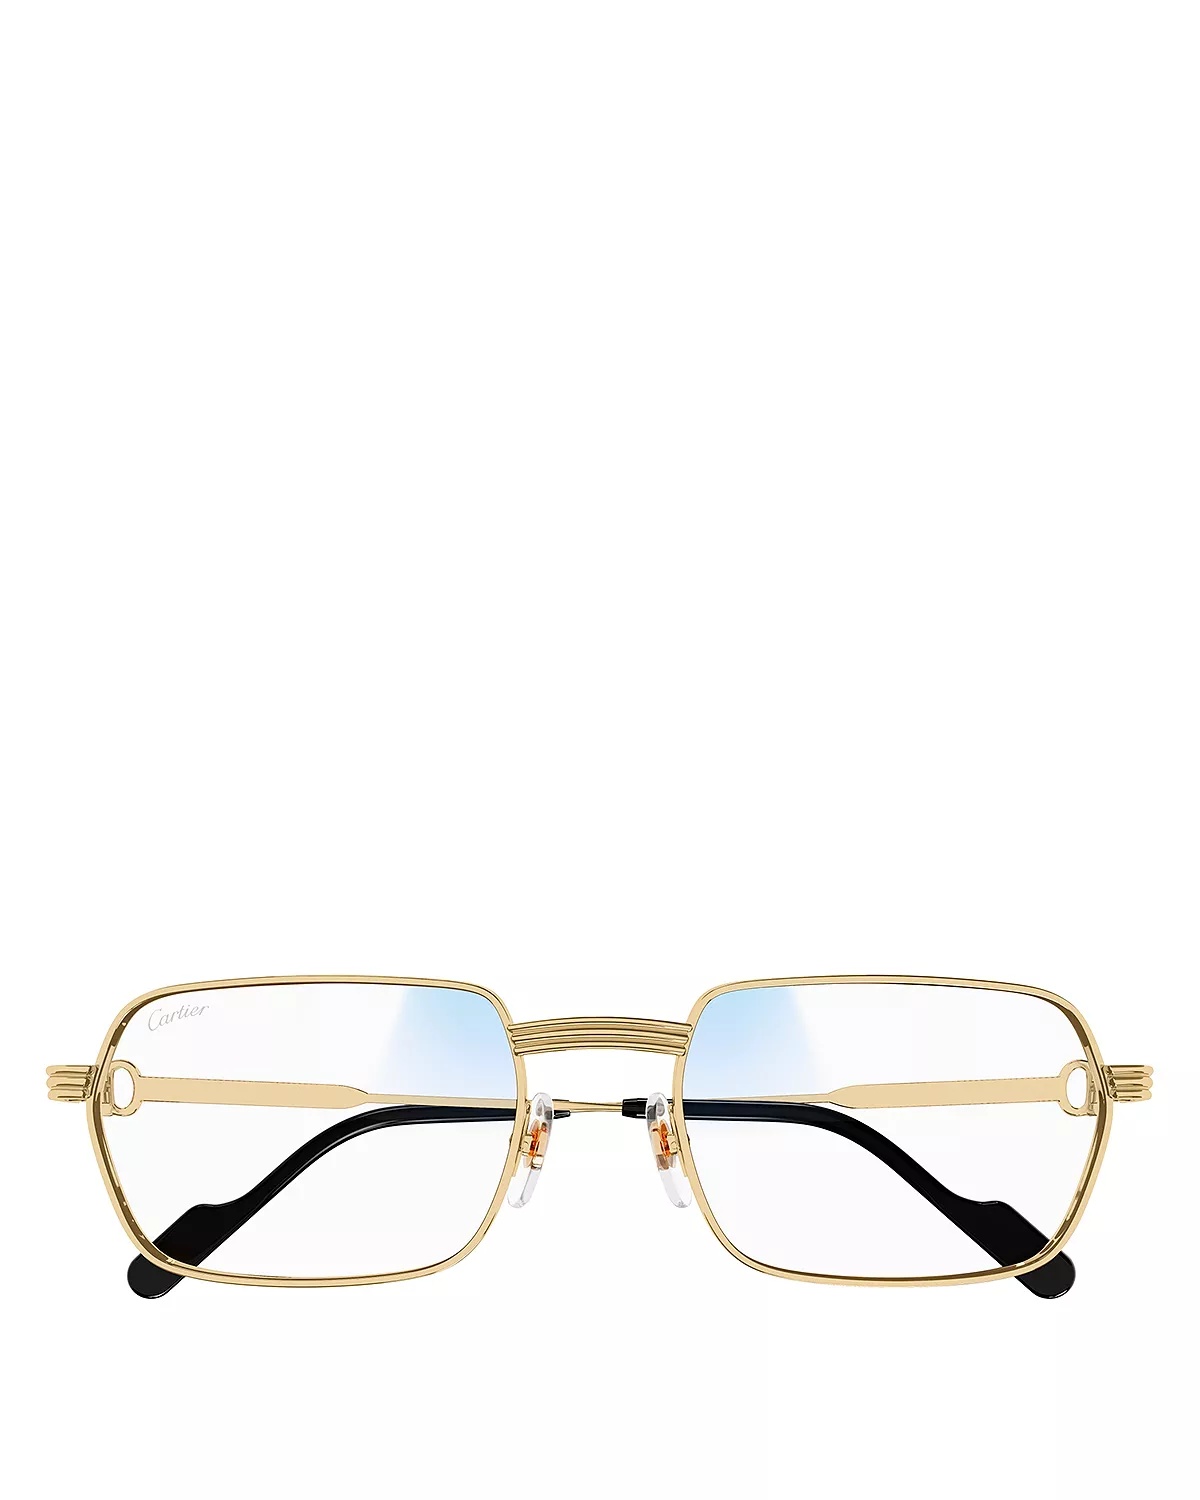 Premiere De Cartier 24 Carat Gold Plated Photochromatic Rectangular Sunglasses, 56mm - 4